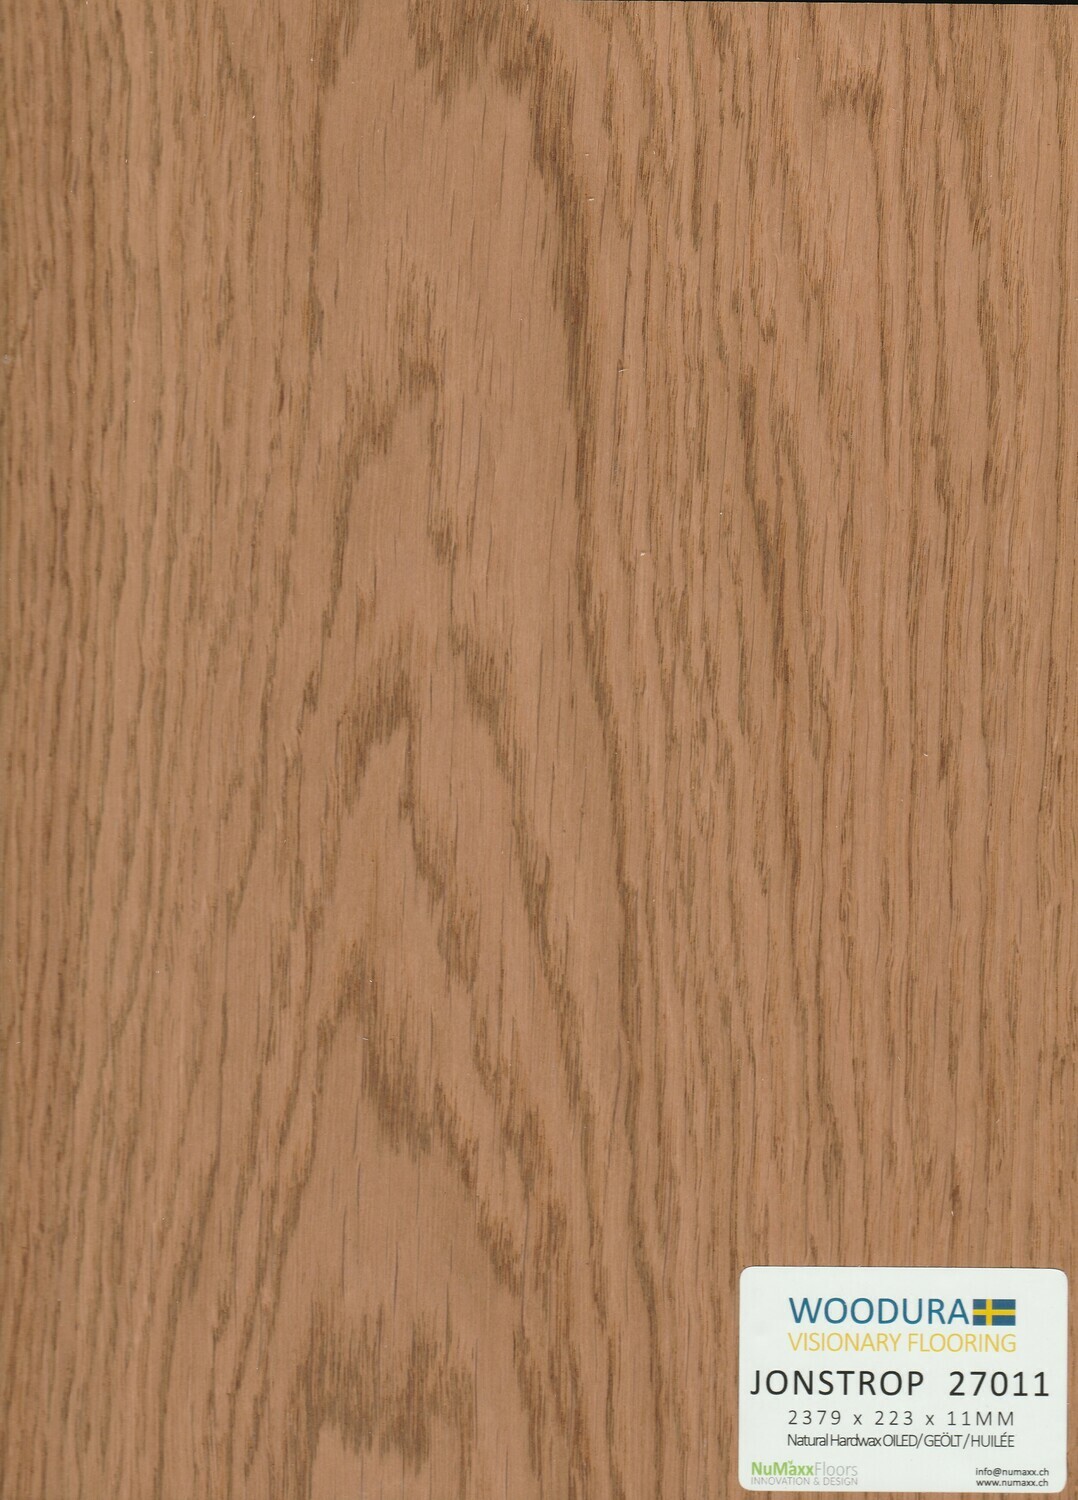 Holzboden Woodura Jonstrop 27011 pro 1m² Stärke 11mm x 223mm x 2379mm Nutzschicht 0.6mm